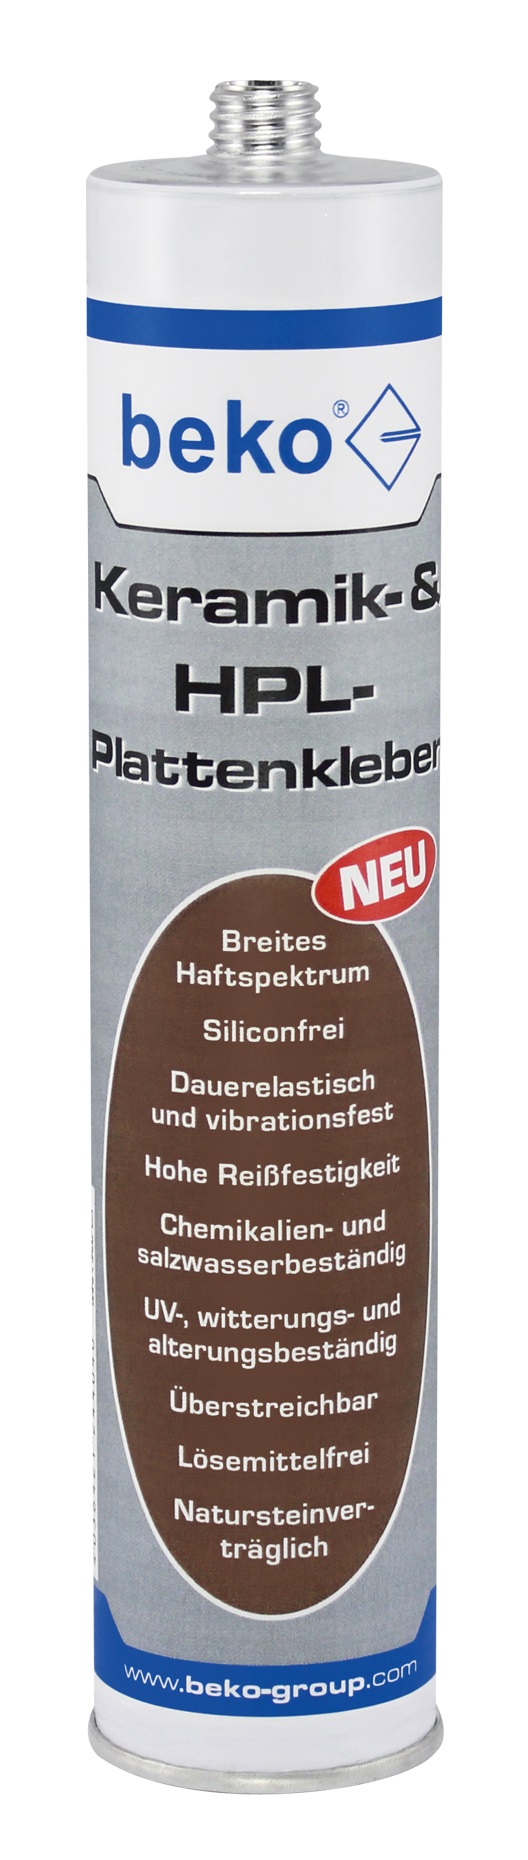 Keramik- & HPL-Plattenkleber